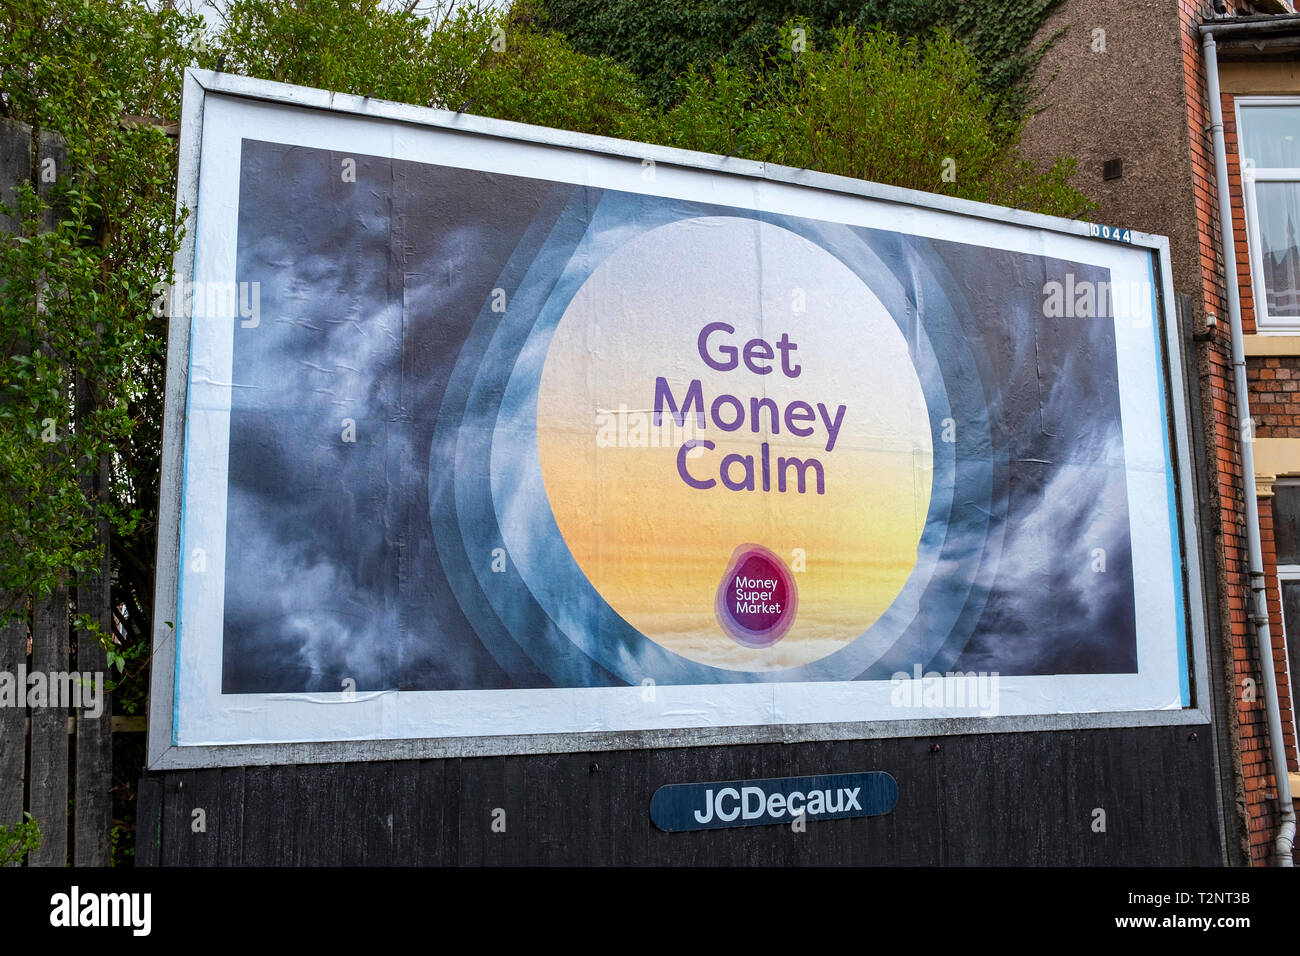 Get money calm says Money Supermarket on a billboard UK Stock Photo